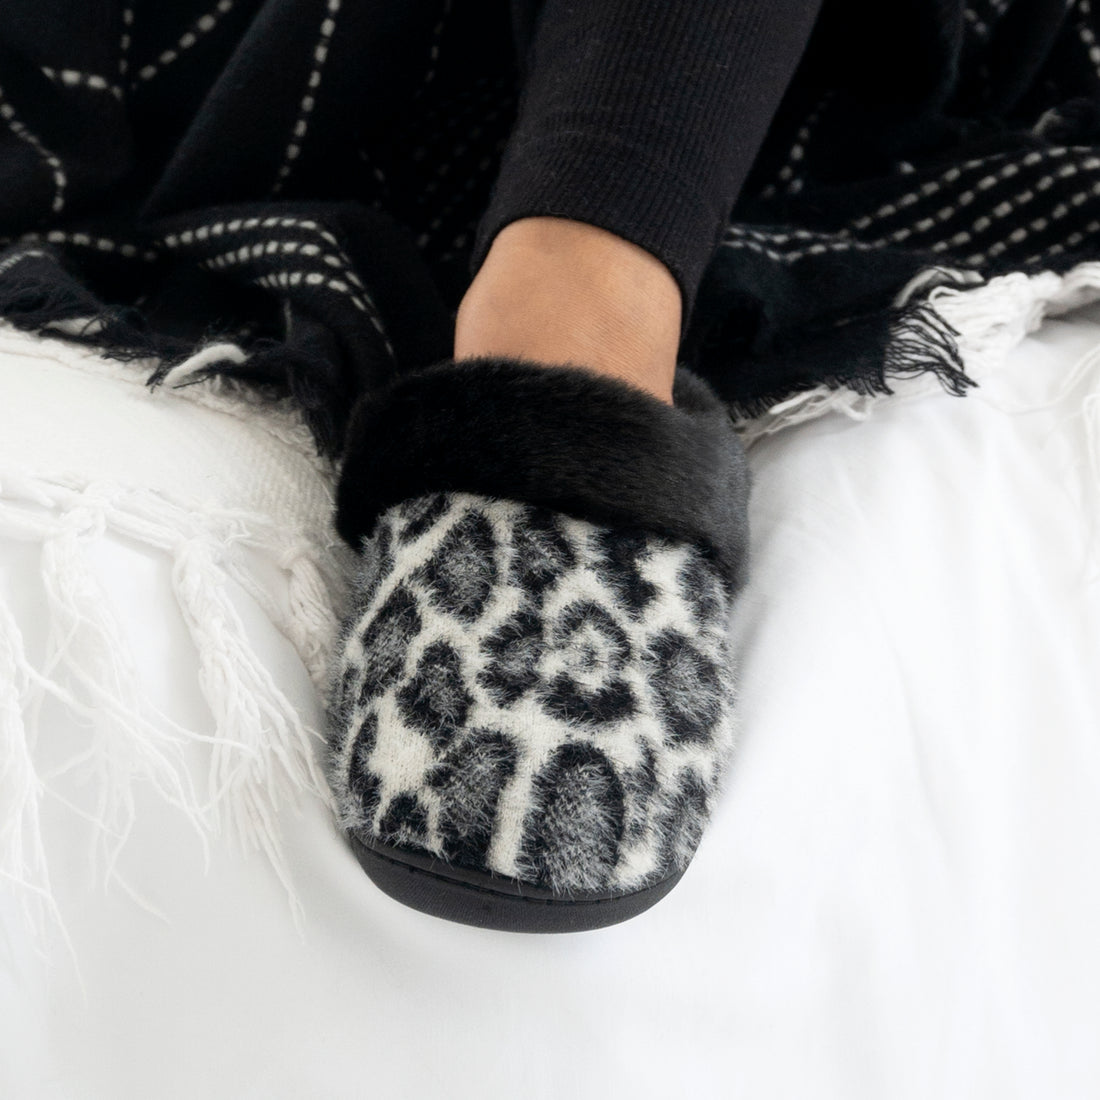 Isotoner Women's Faux Fur and Satin Tabby Slide Slippers Black 9-10